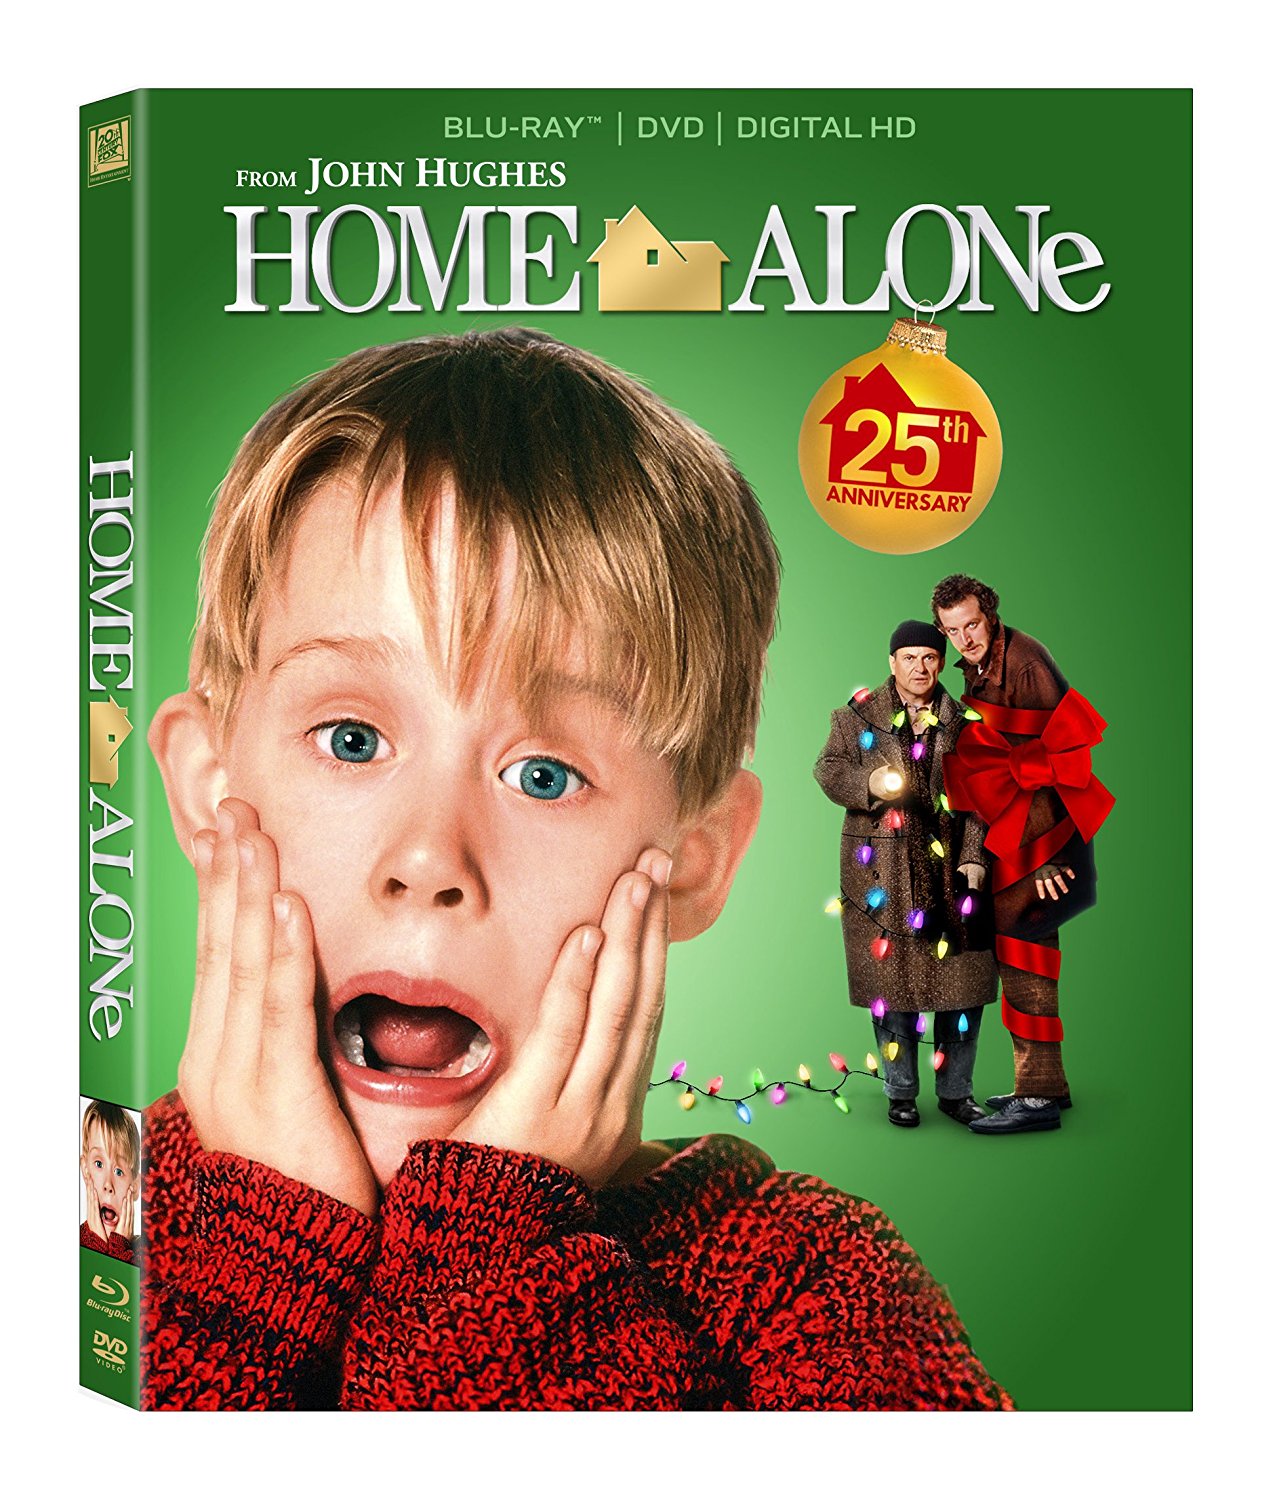 FOX Home Alone Blu-ray Box Art